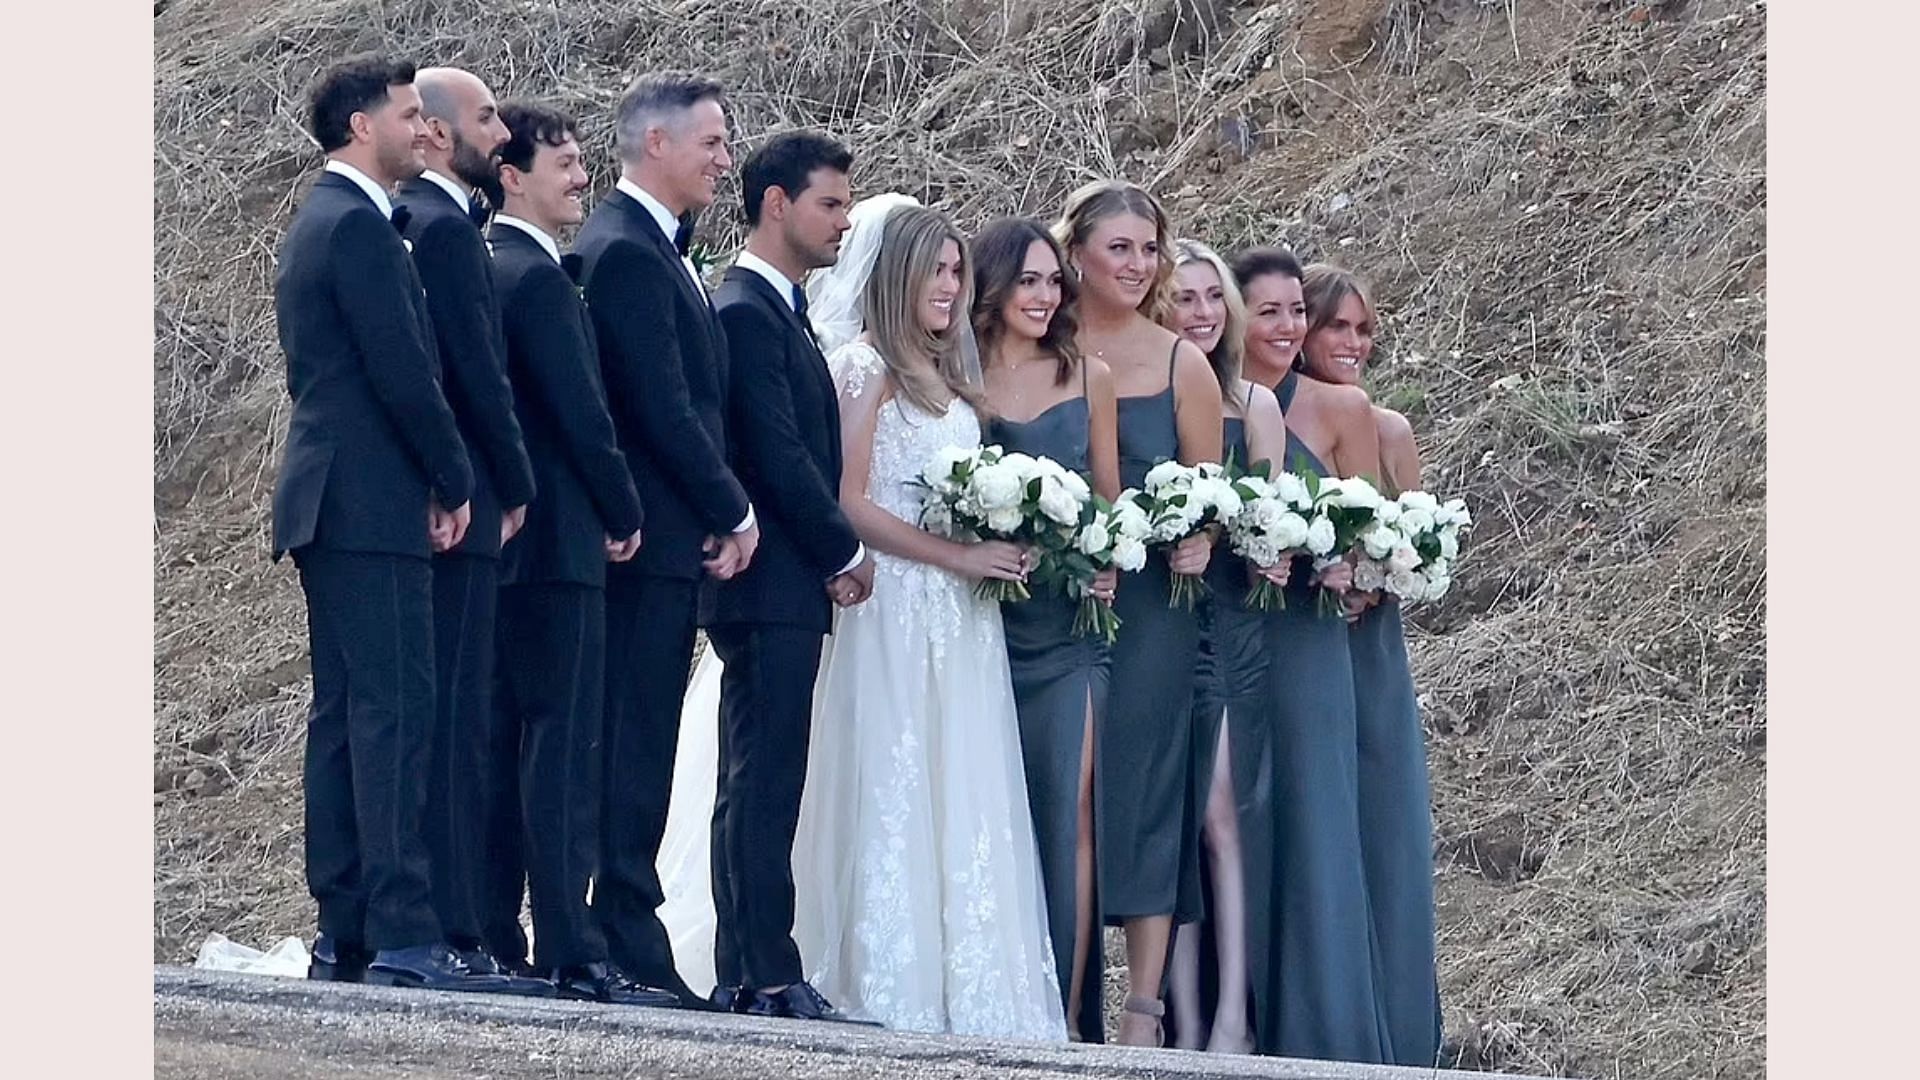 The Lautner wedding party (image via Getty/Aiim)